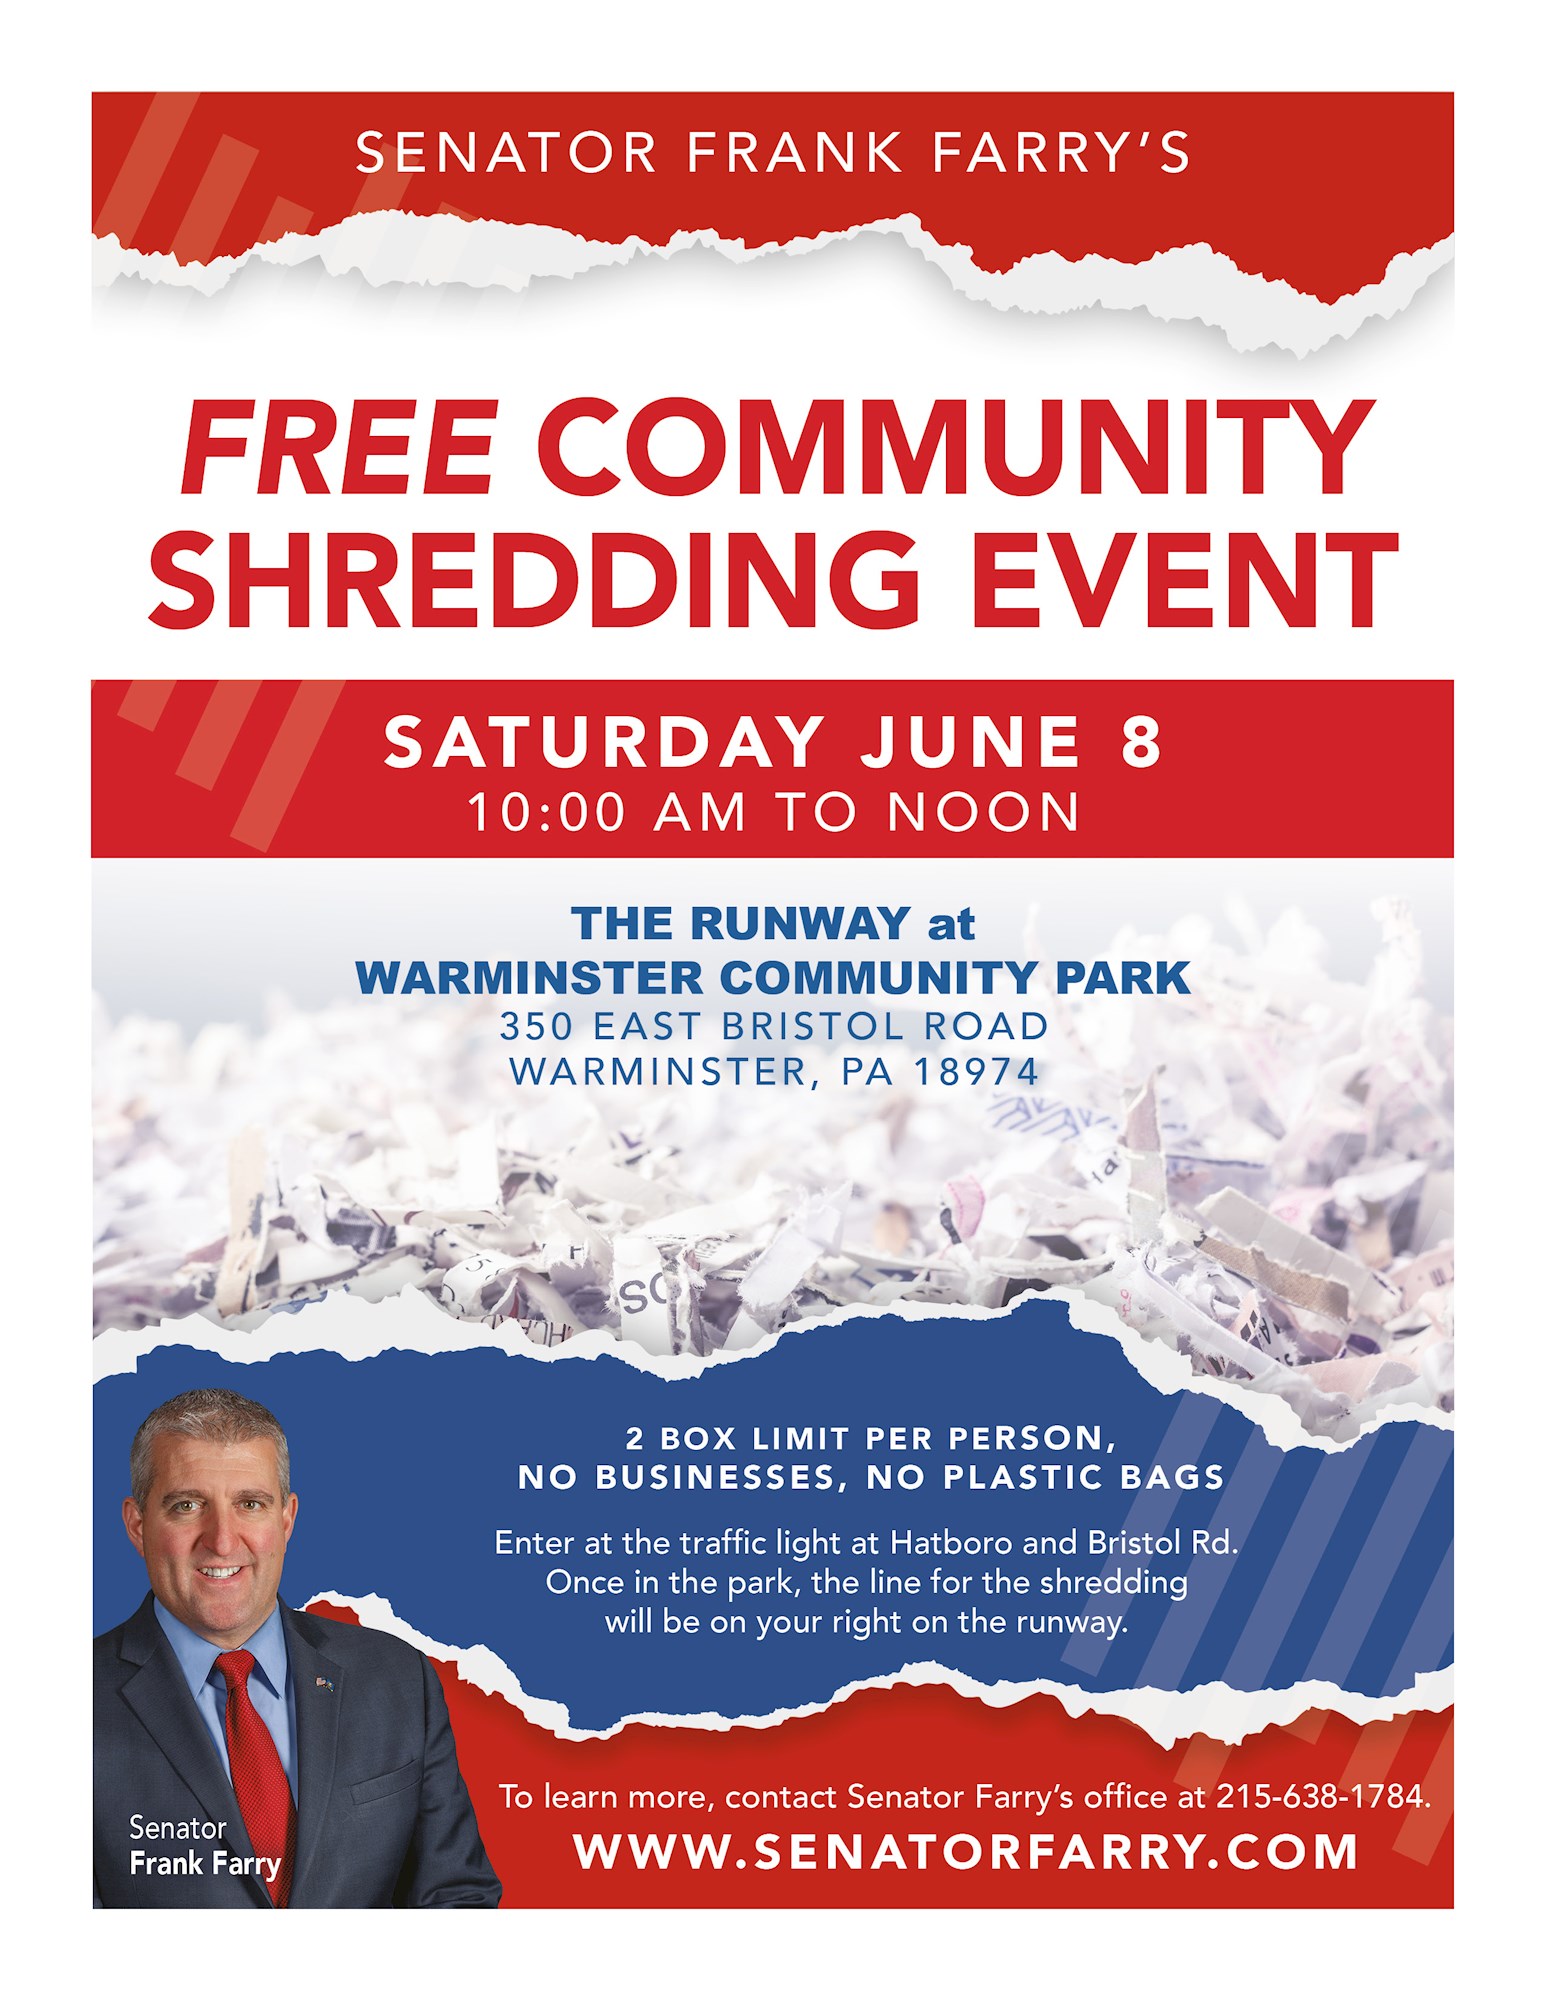 Senator Frank Farry's FREE Community Shredding Event